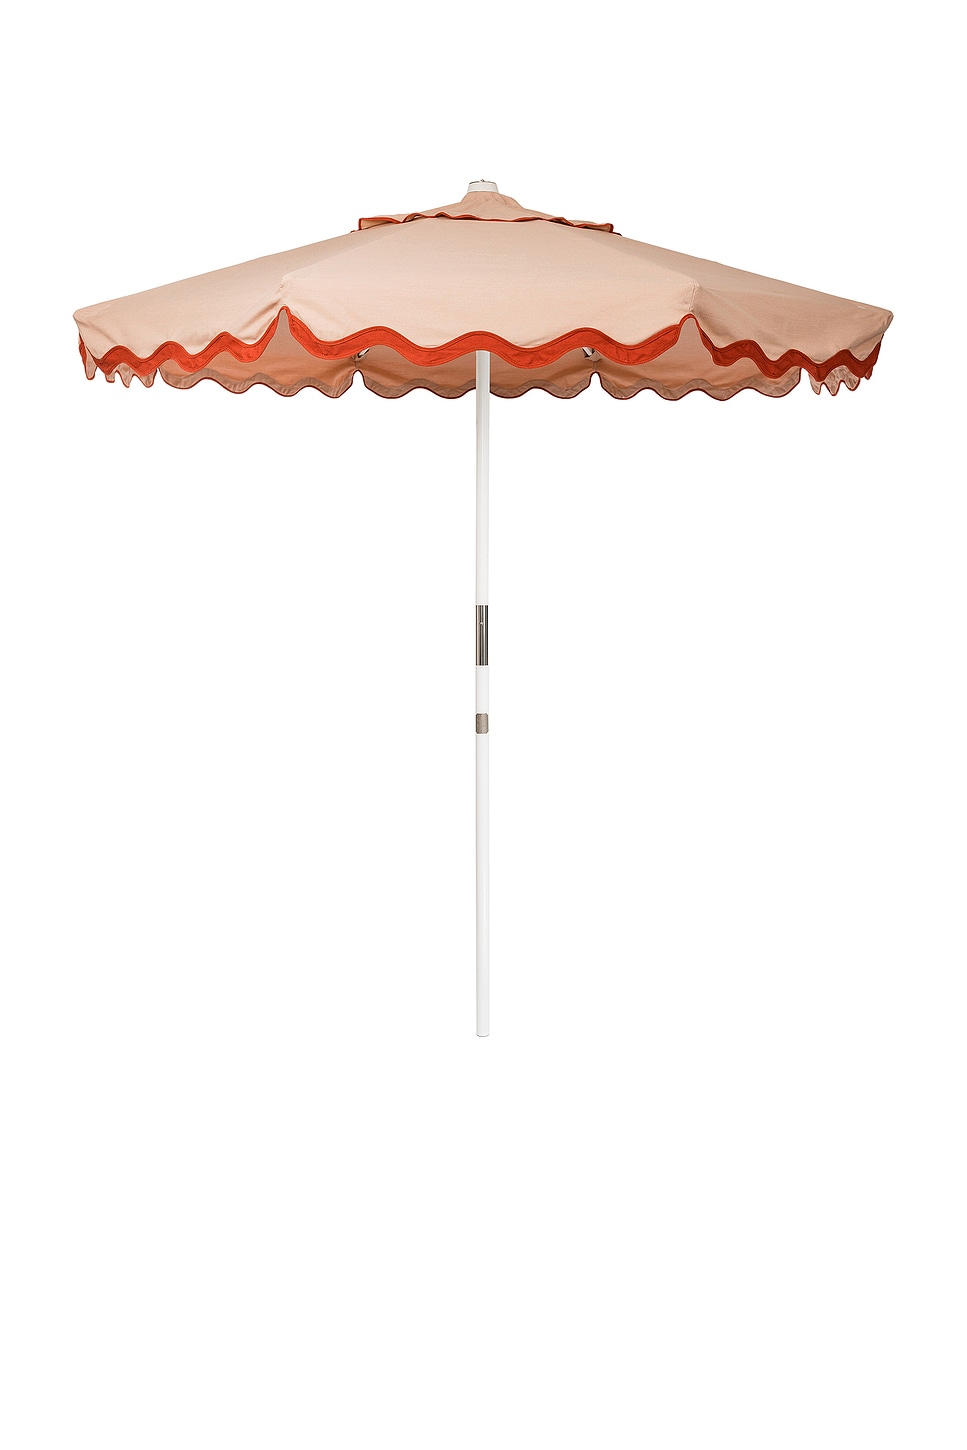 Market Umbrella in Coral